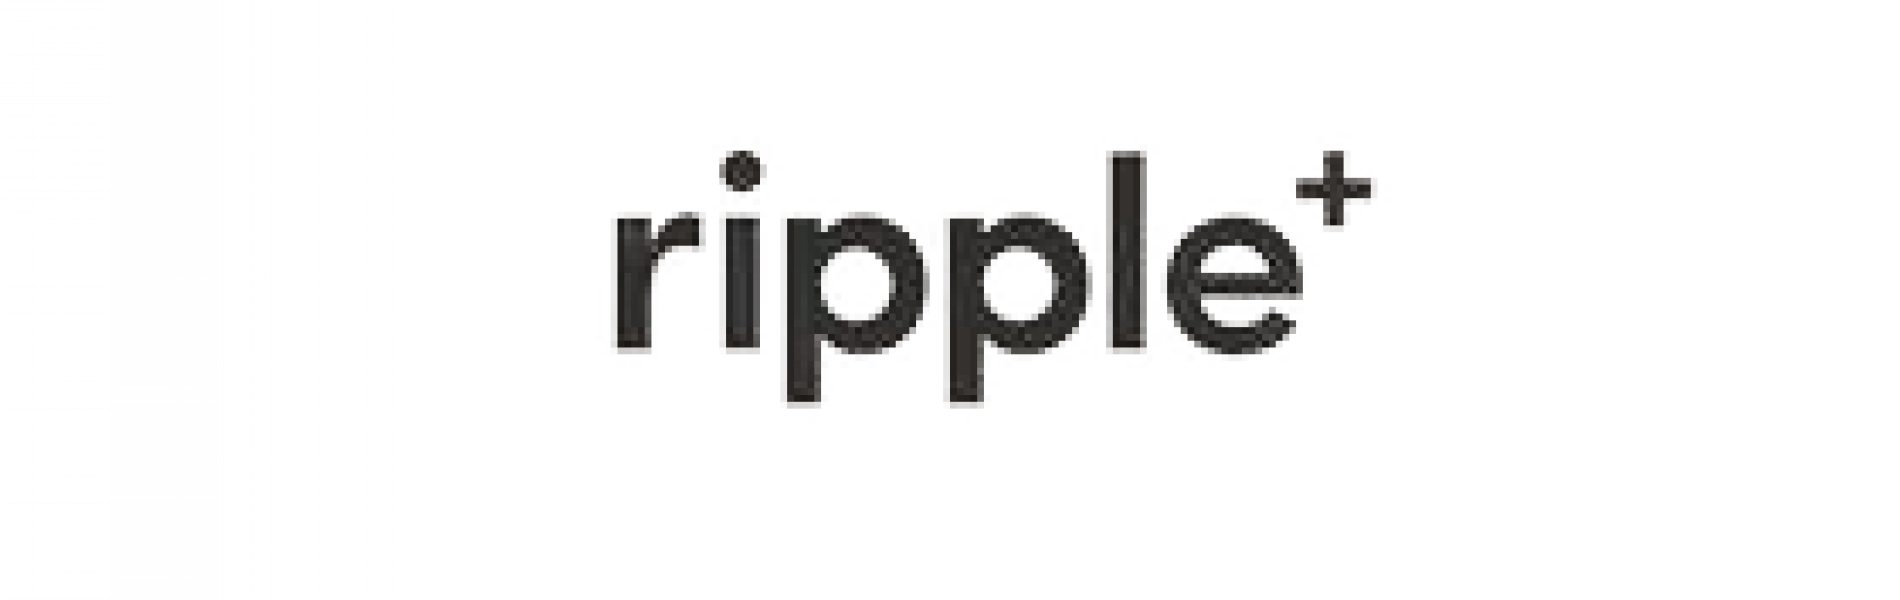 Ripple+